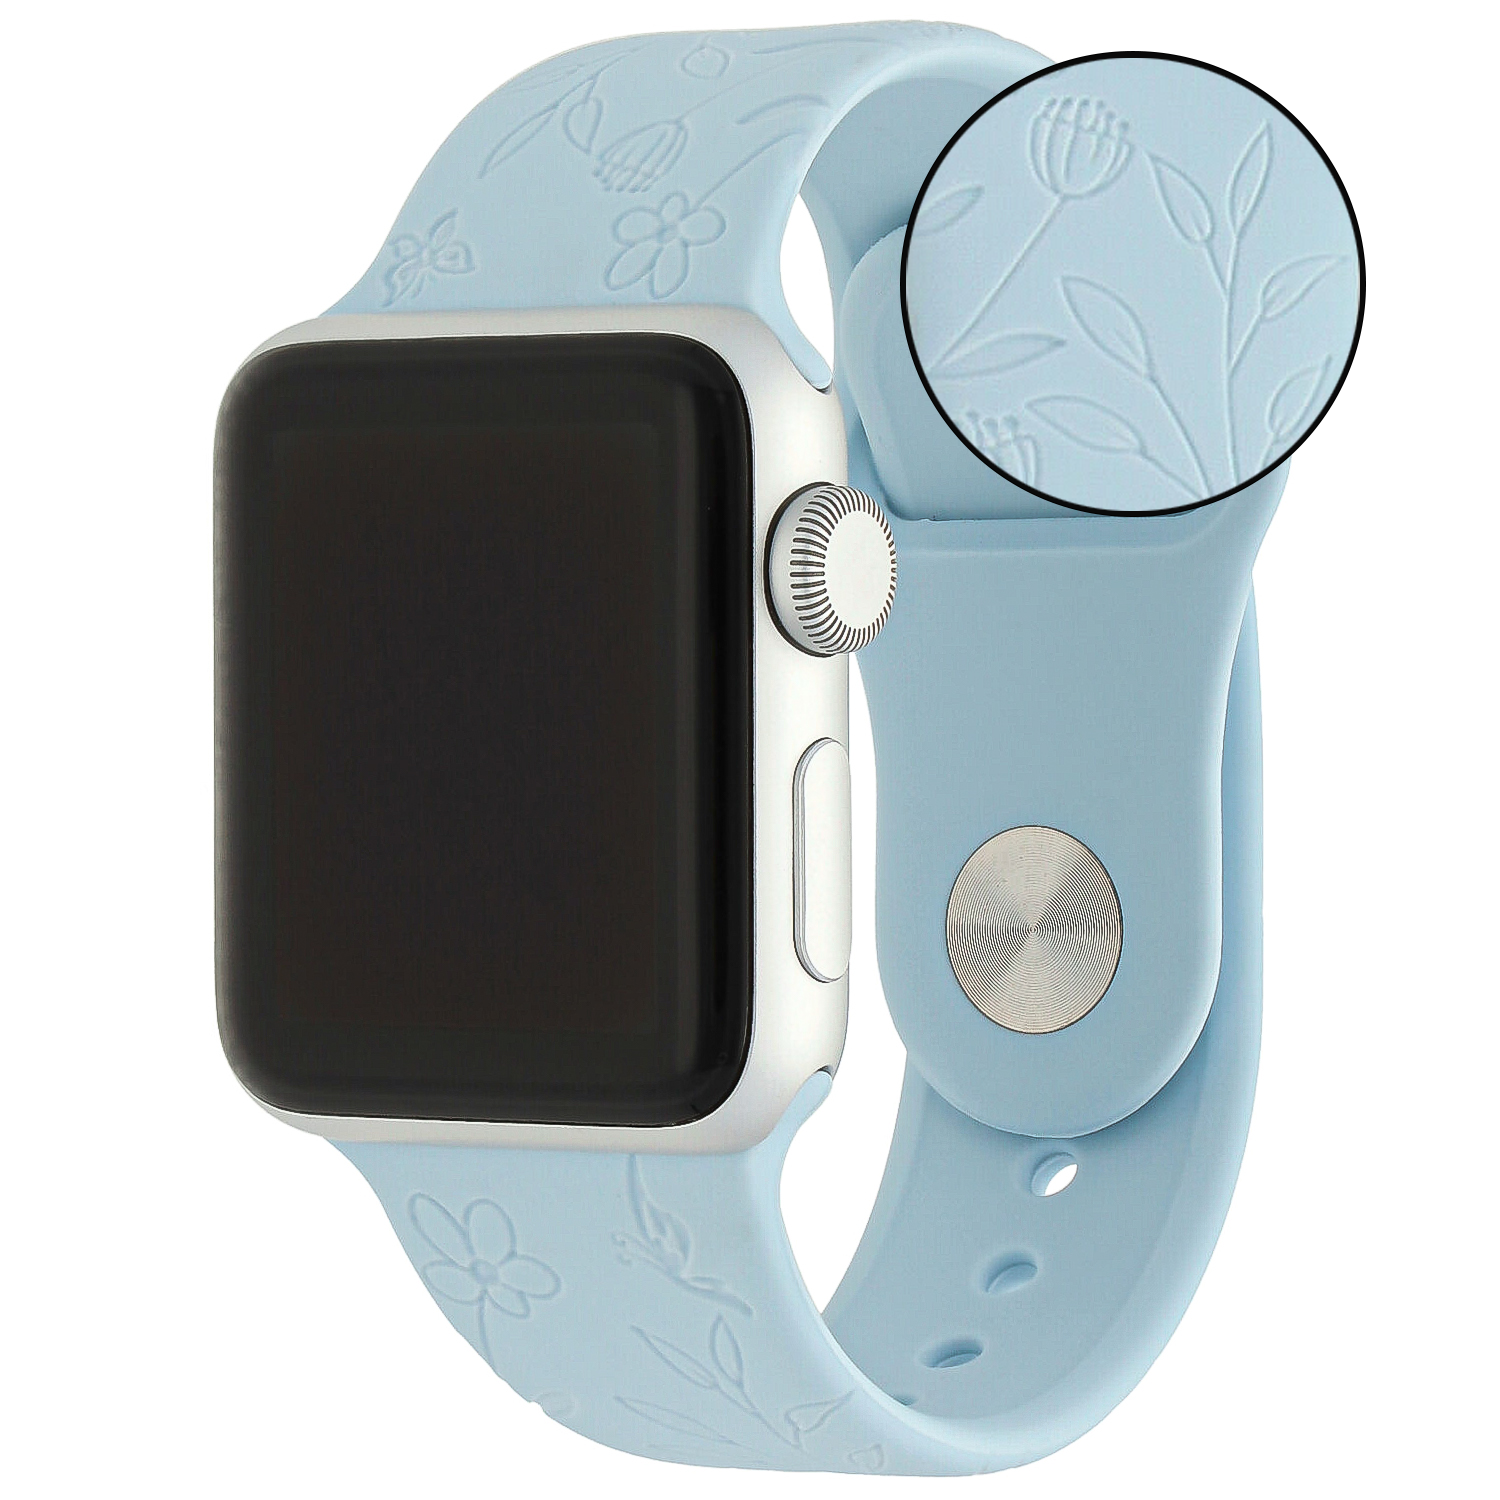 Bracelet sport imprimé Apple Watch - bleu fleuri